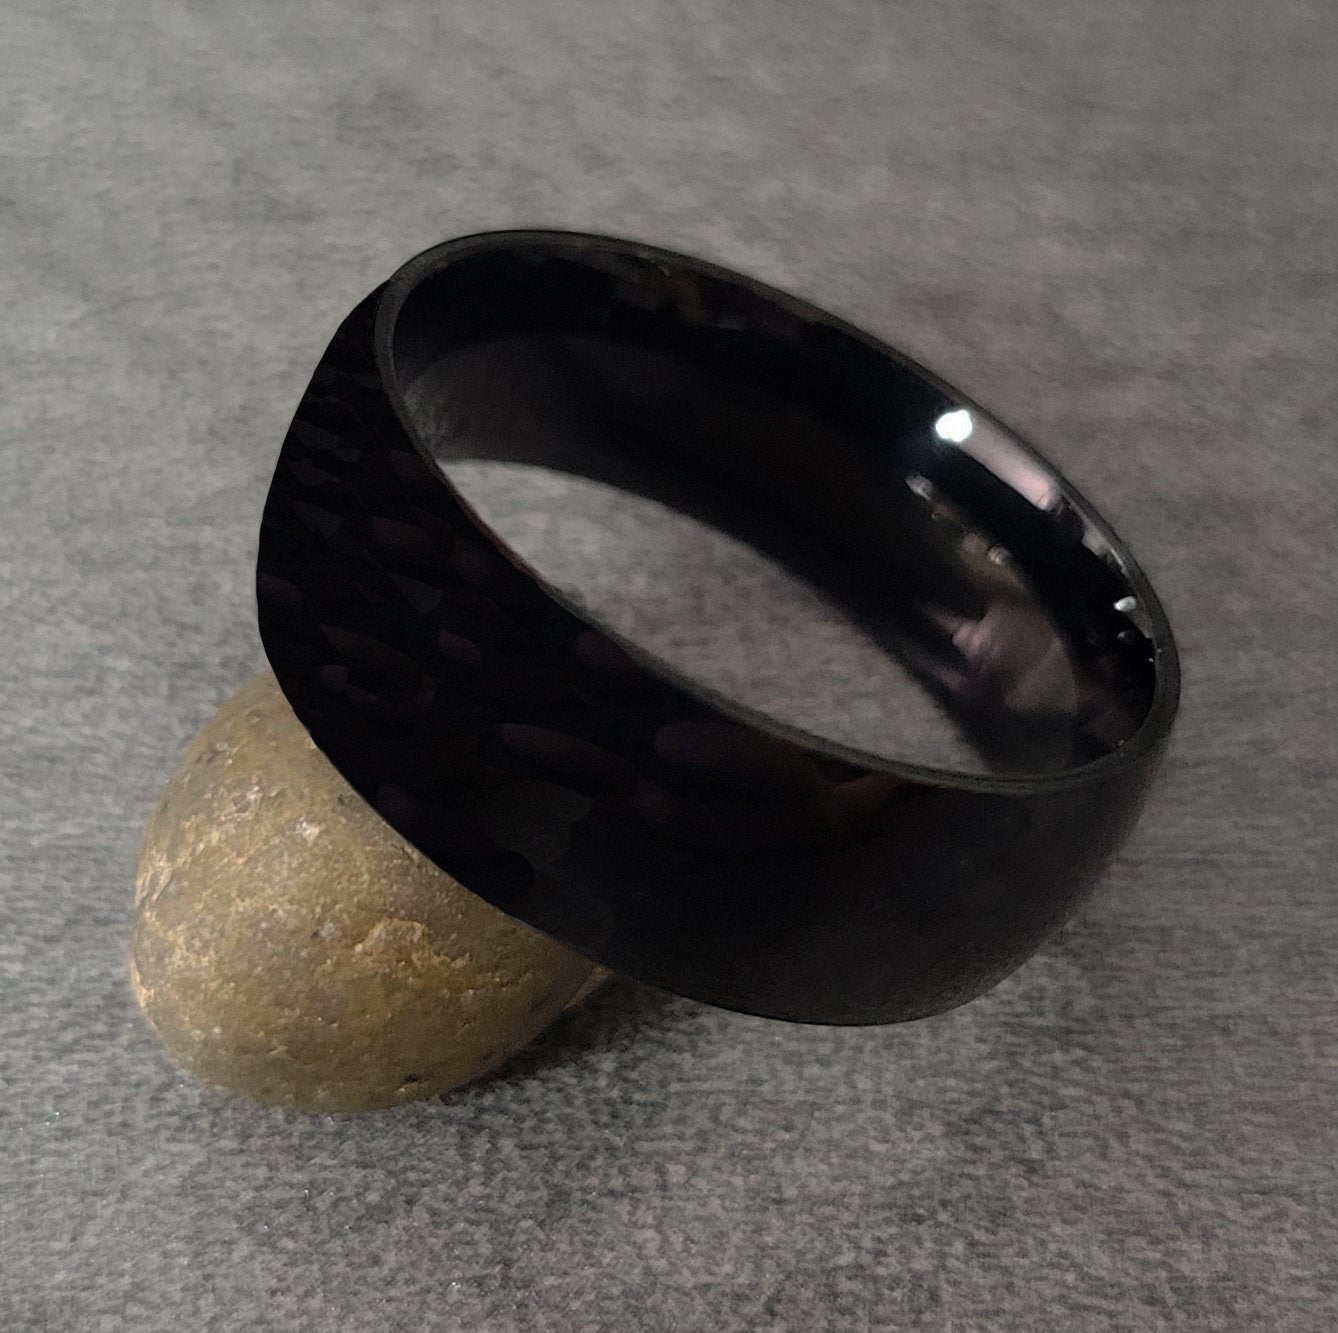 ThinkEngraved wedding Band Personalized Men's Black Wedding Ring - Engraved Men's Ring Handwriting Ring